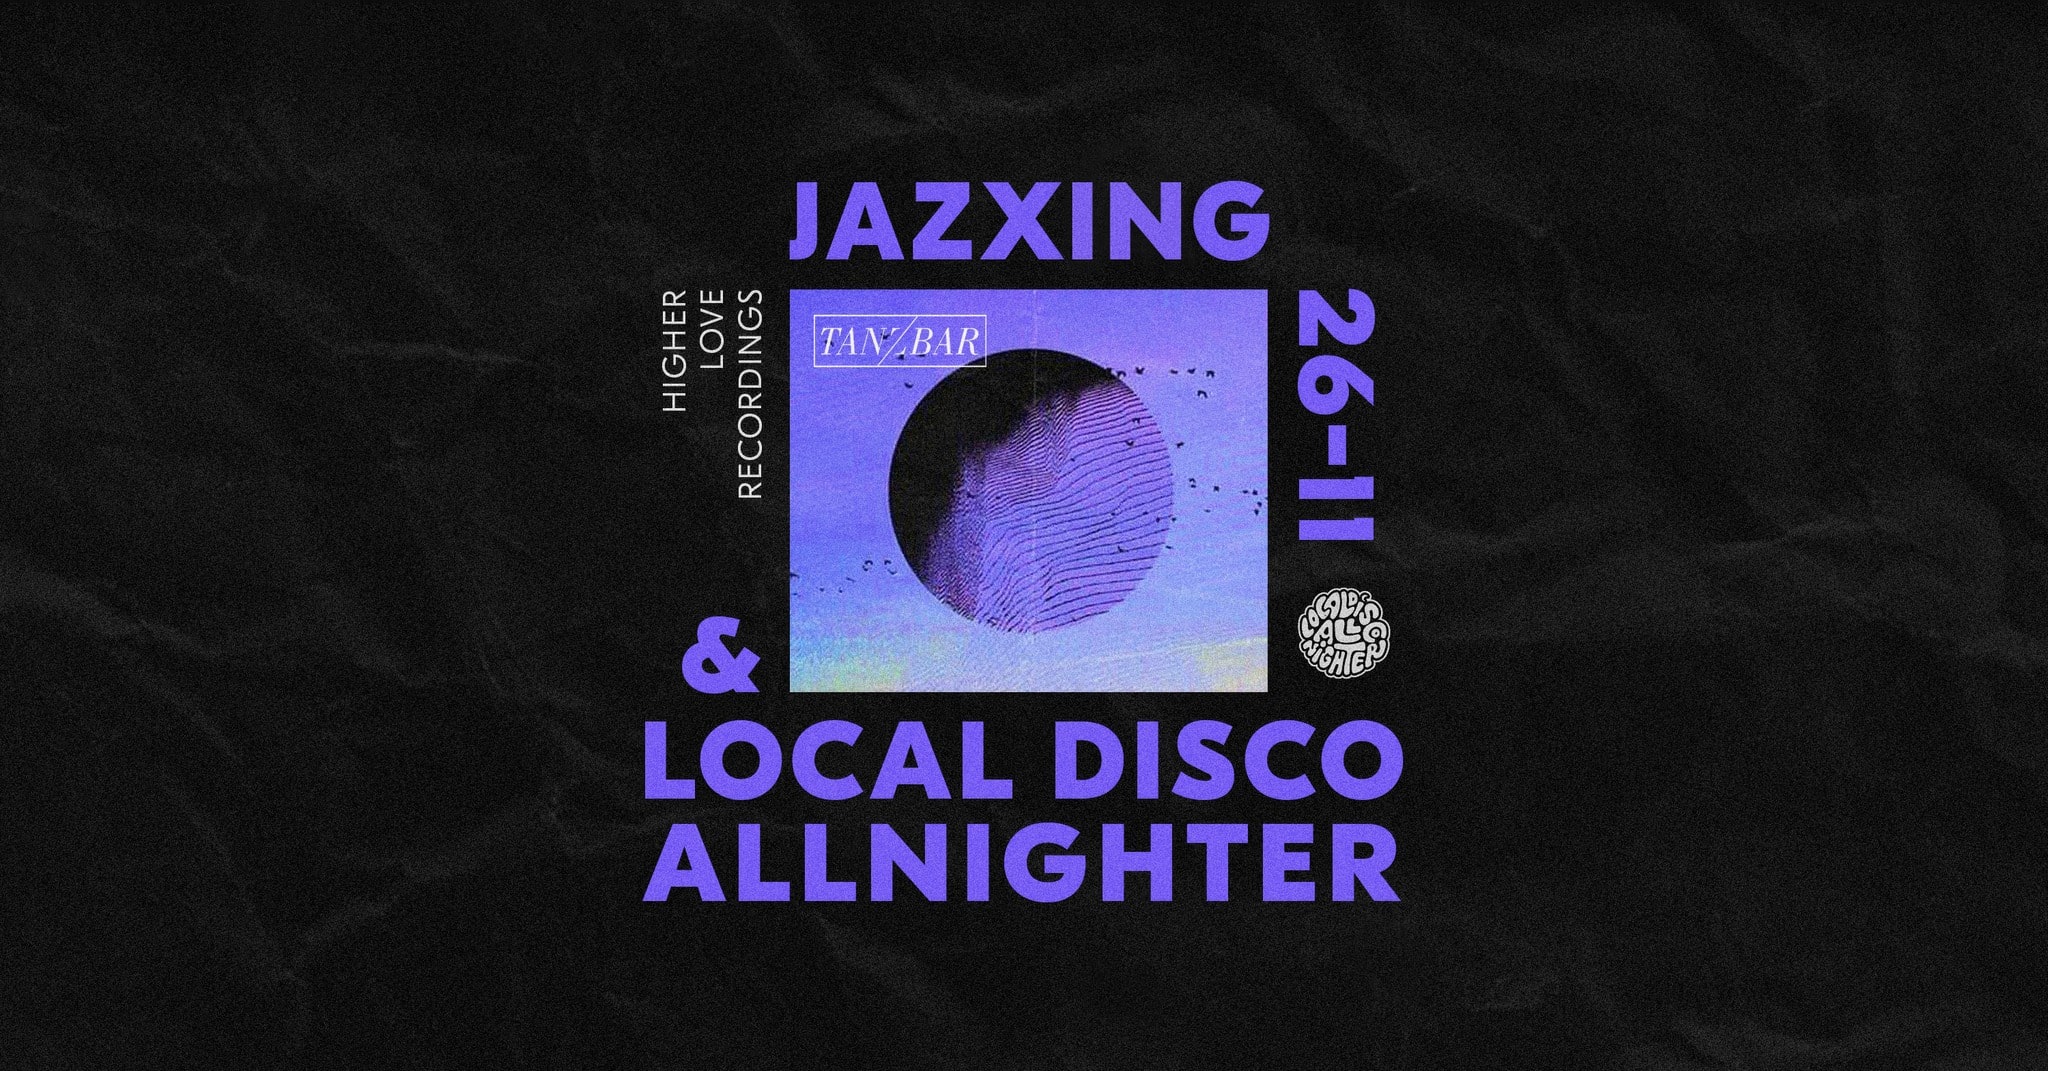 Jazxing & Local Disco Allnighter